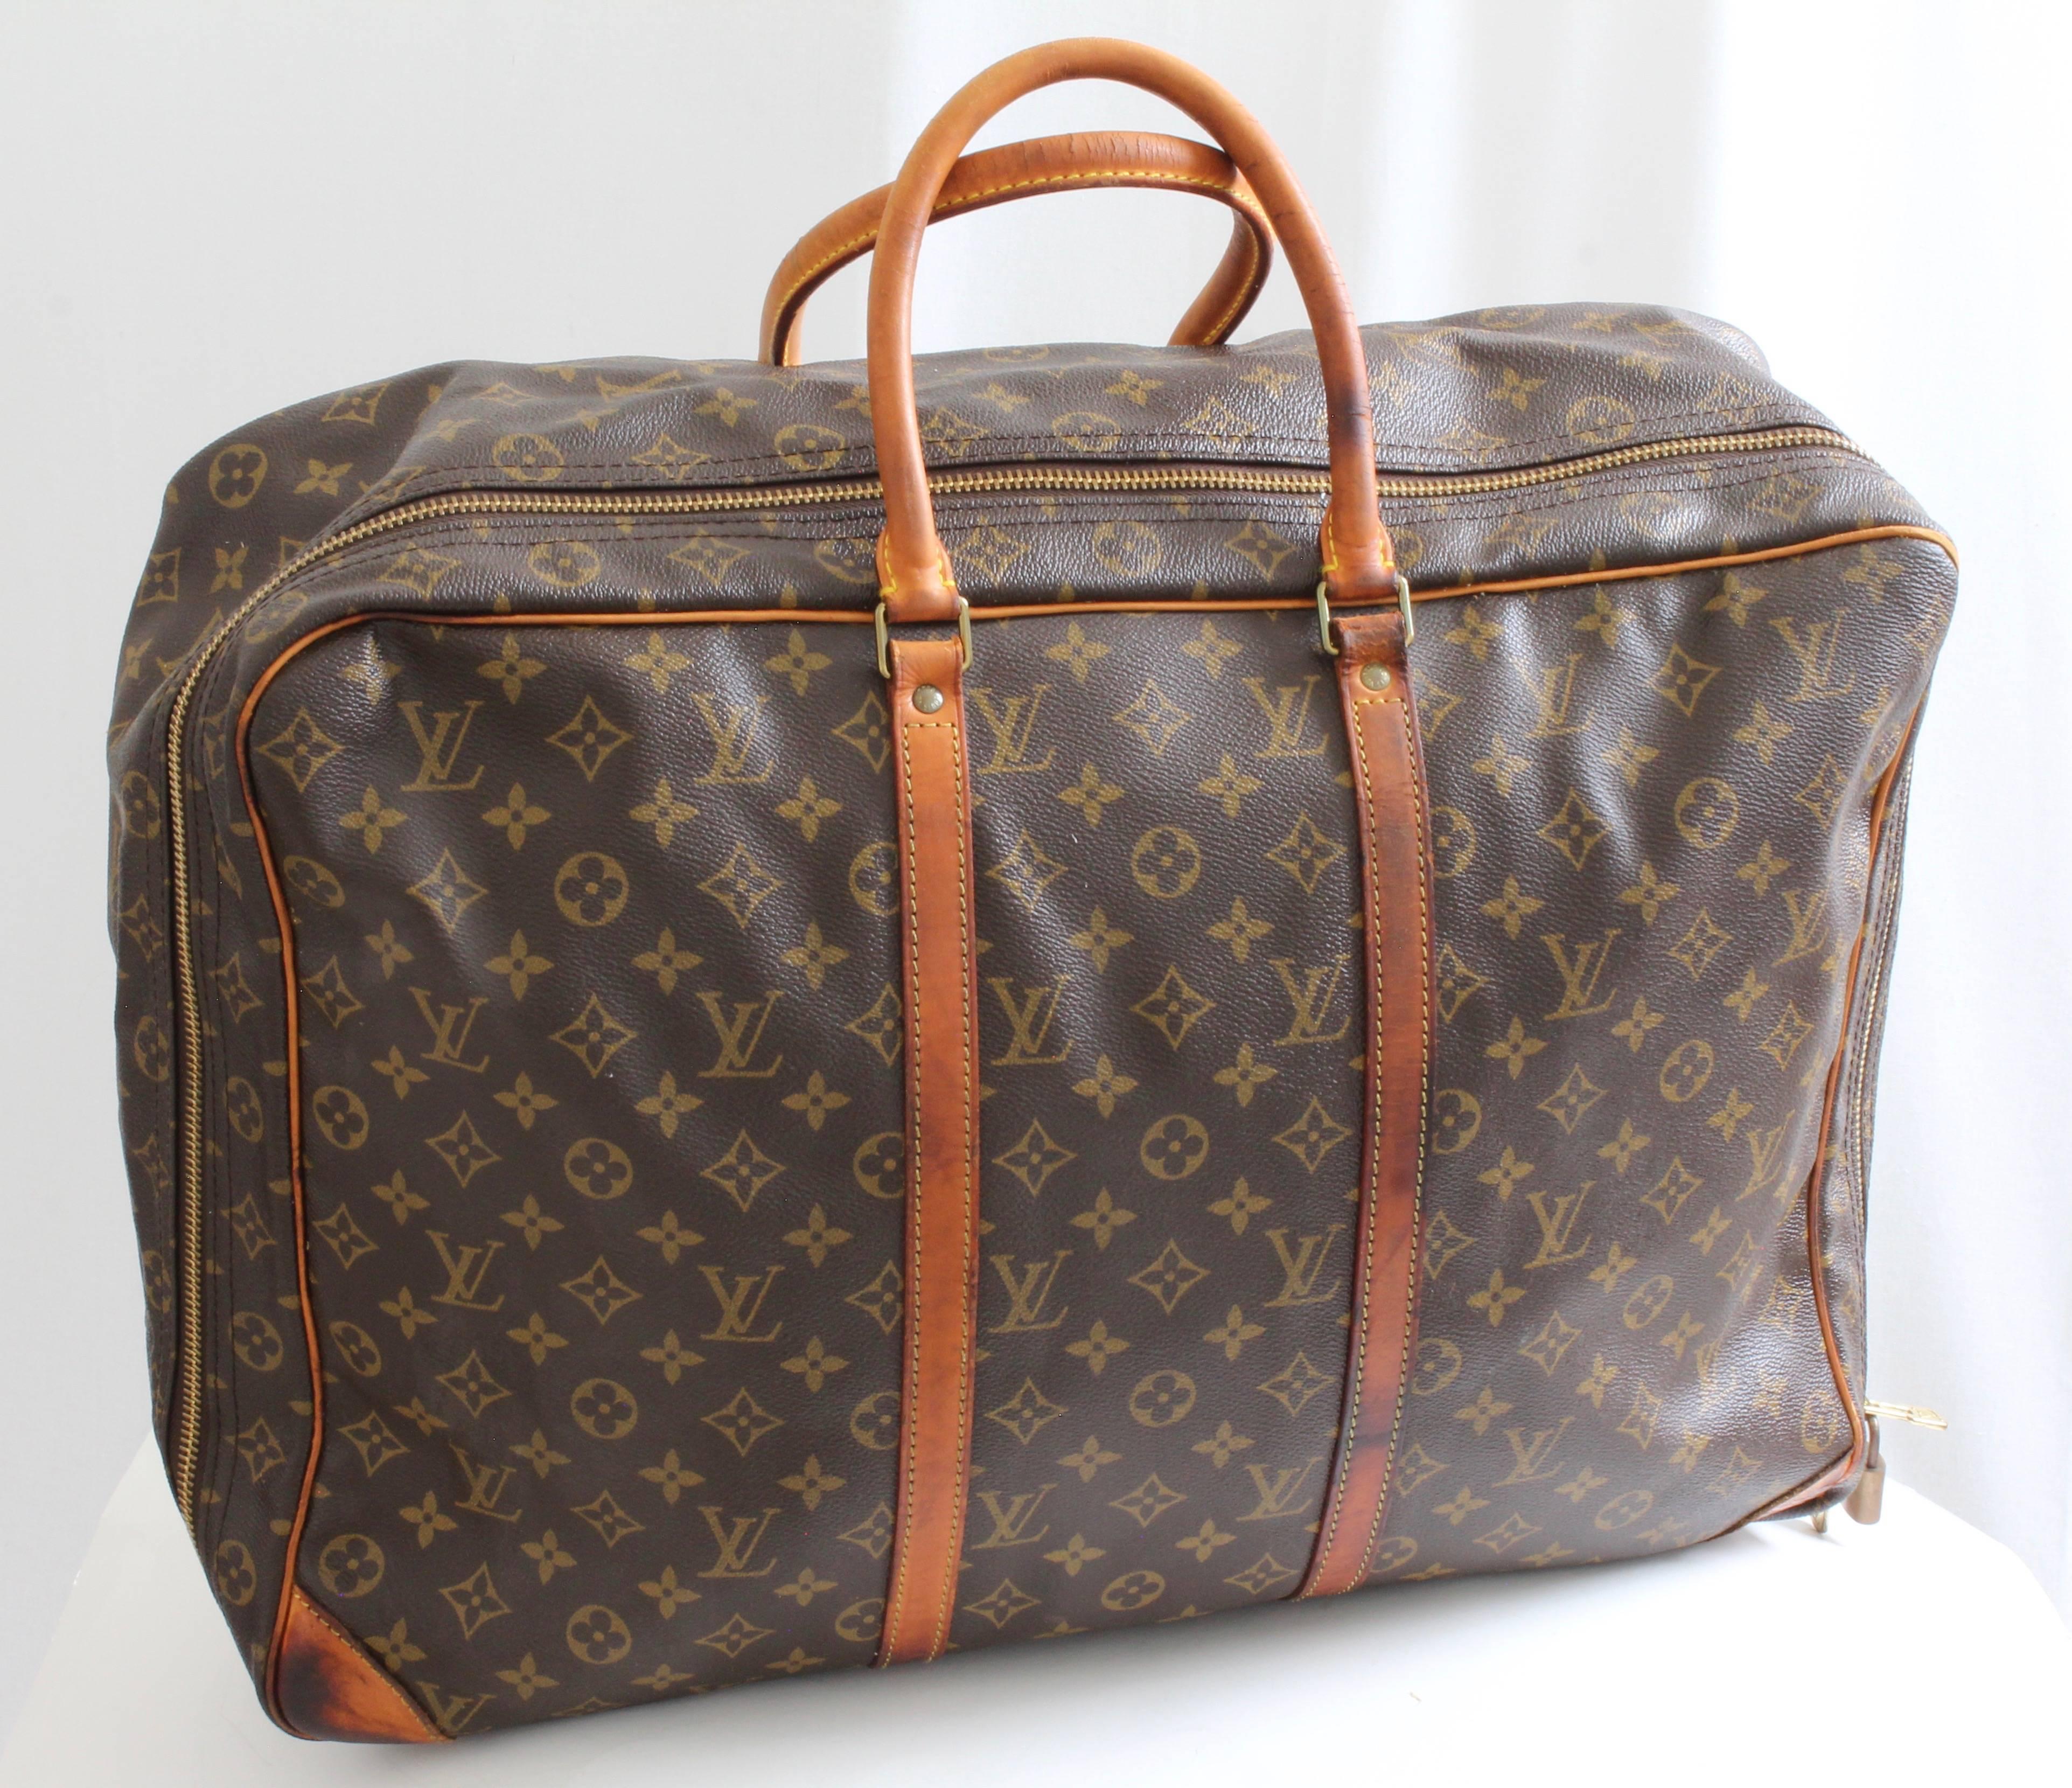 Brown Louis Vuitton Monogram Sirius Suitcase 50cm Luggage Weekender Travel Bag 80s 